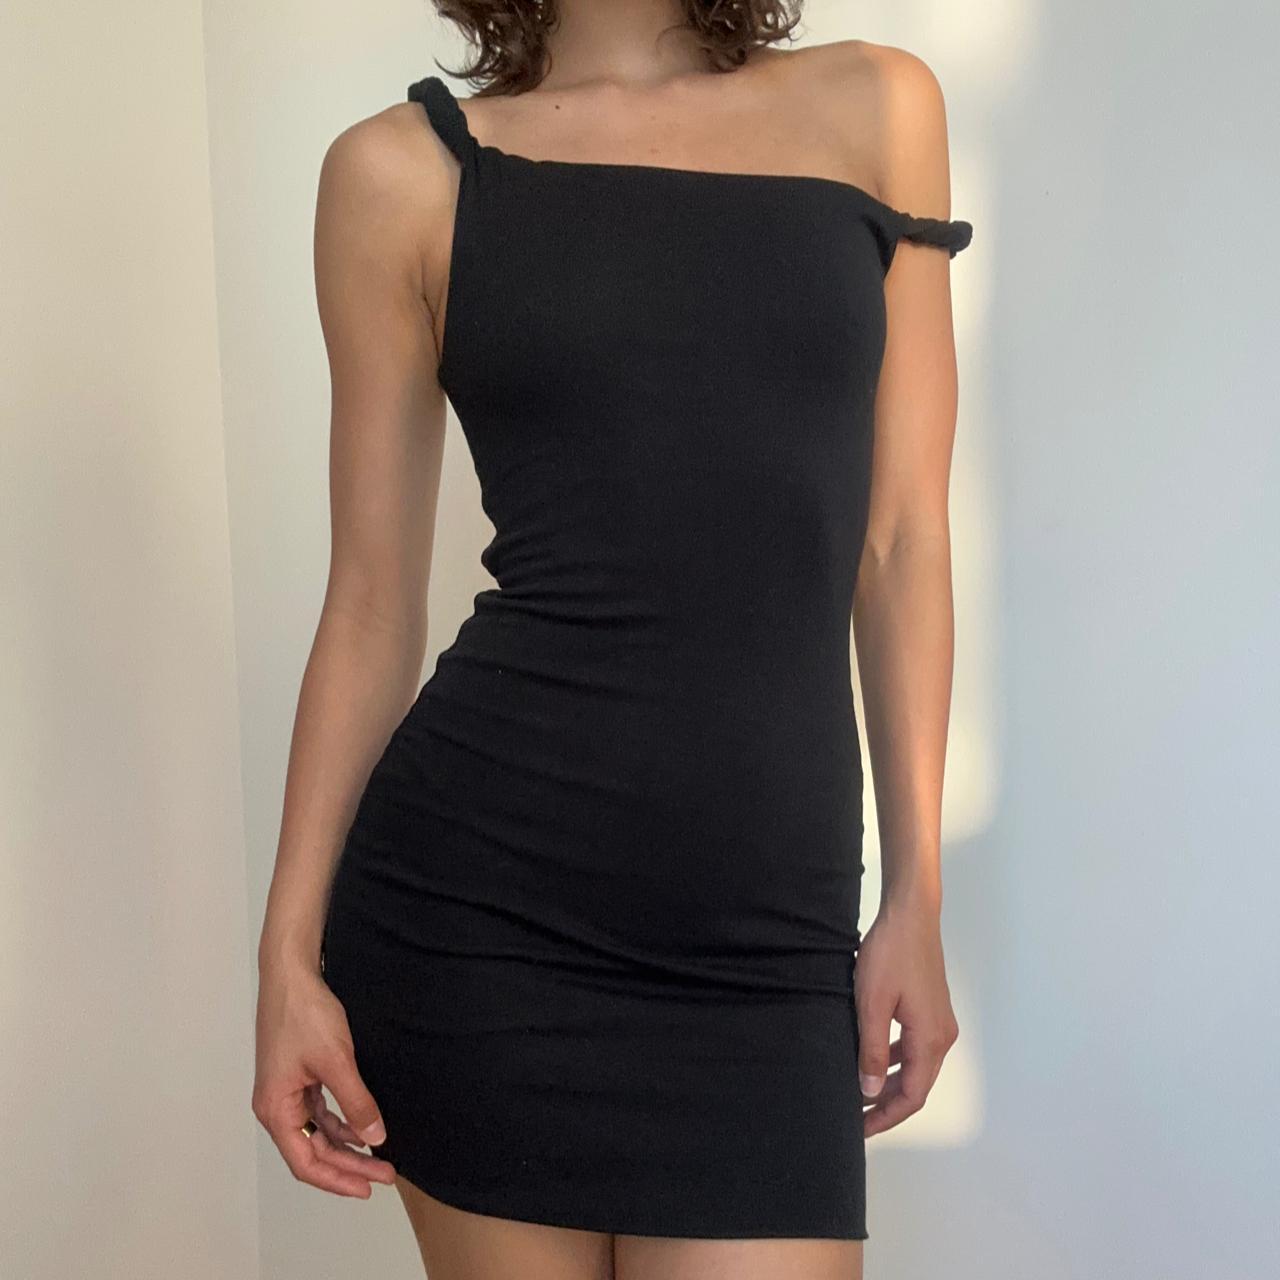 KOOKAÏ Women's Black Dress (2)